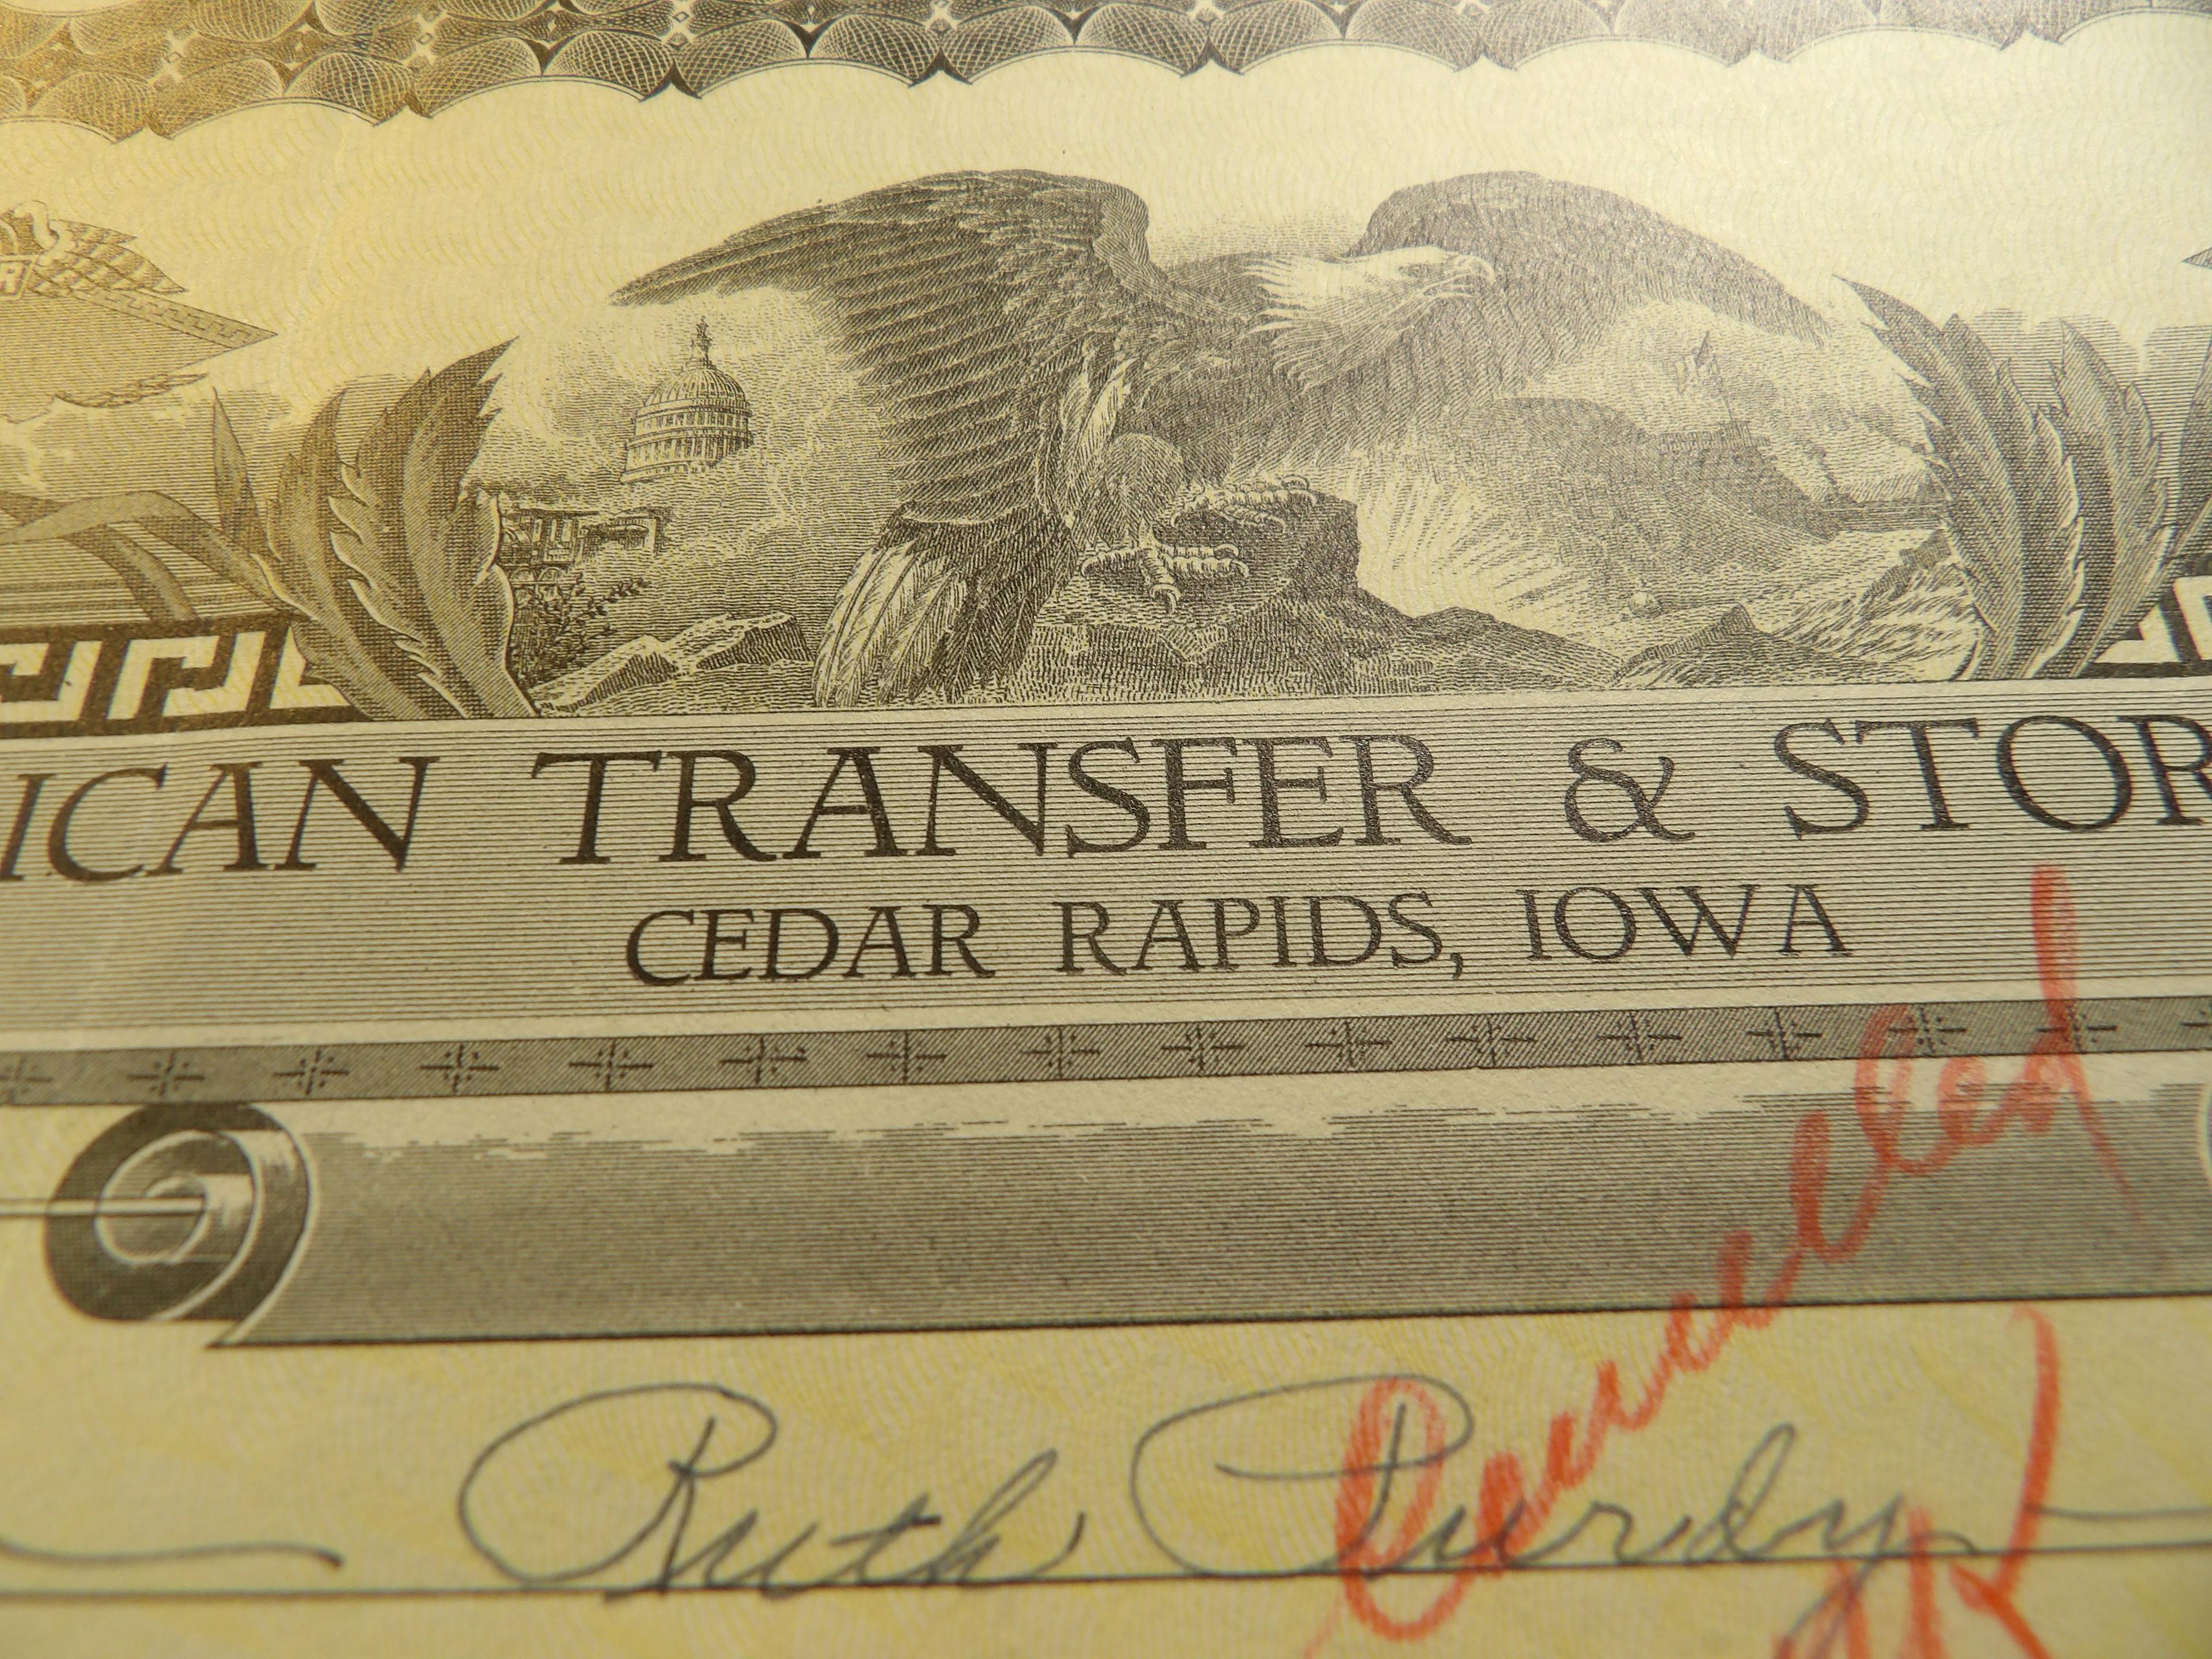 AMERICAN TRANSFER & STORAGE CO., Cedar Rapids, Iowa, 1937 Stock Certificate Number 23 for four share